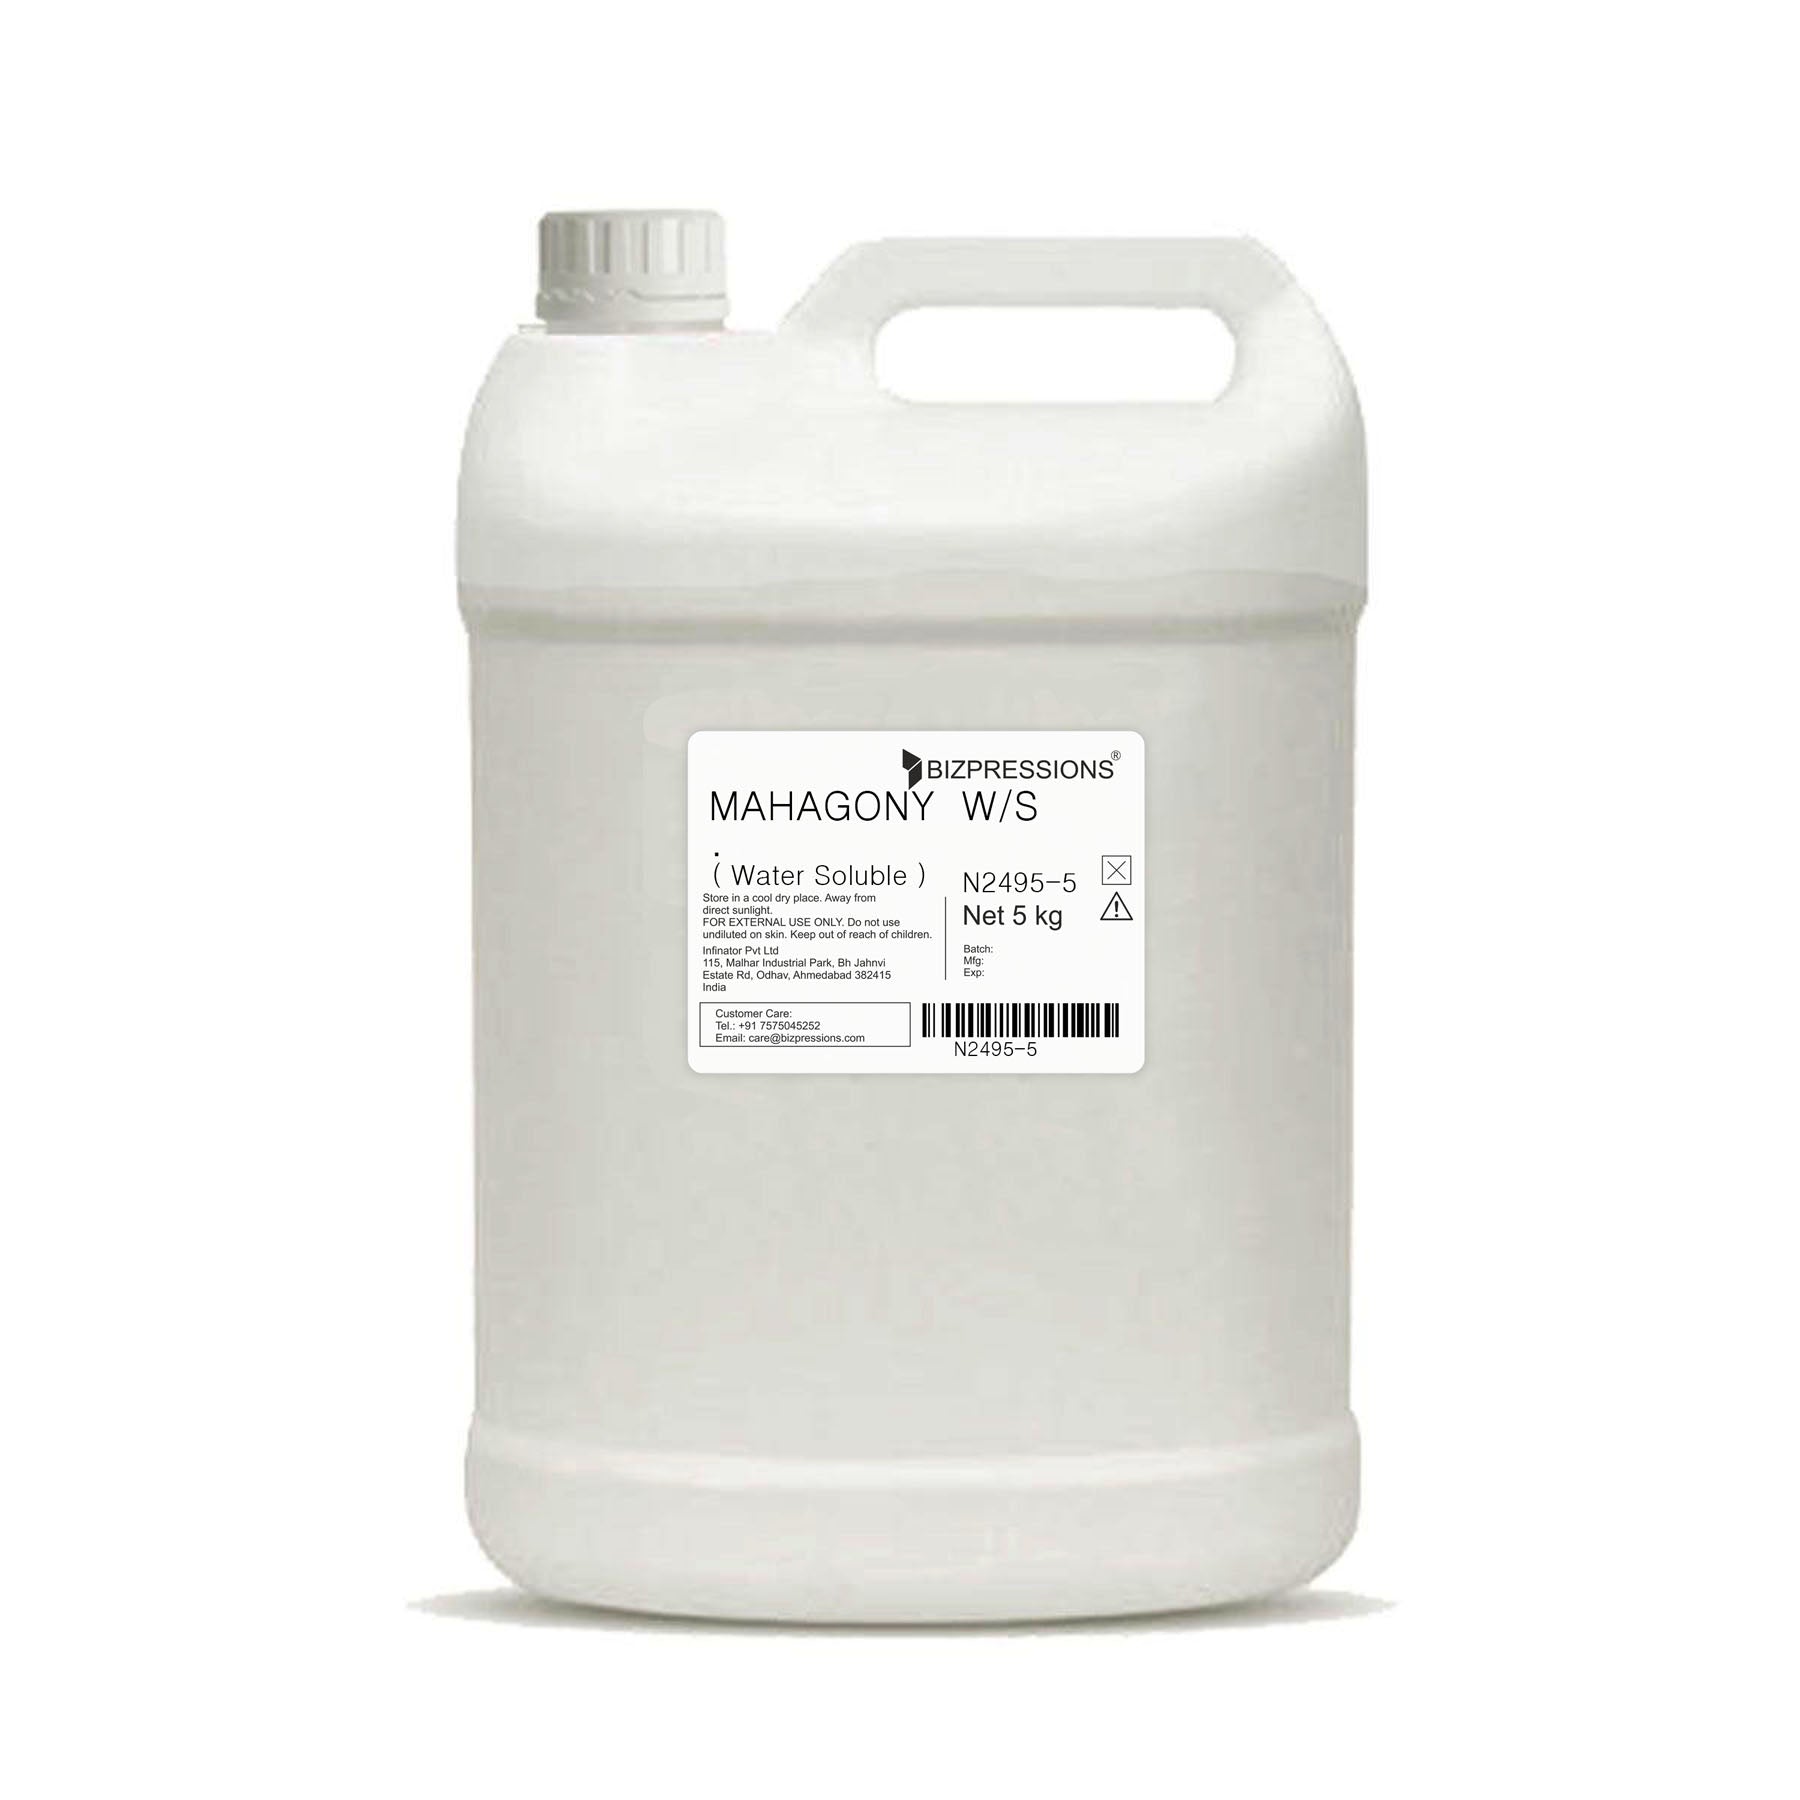 MAHAGONY W/S - Fragrance ( Water Soluble ) - 5 kg